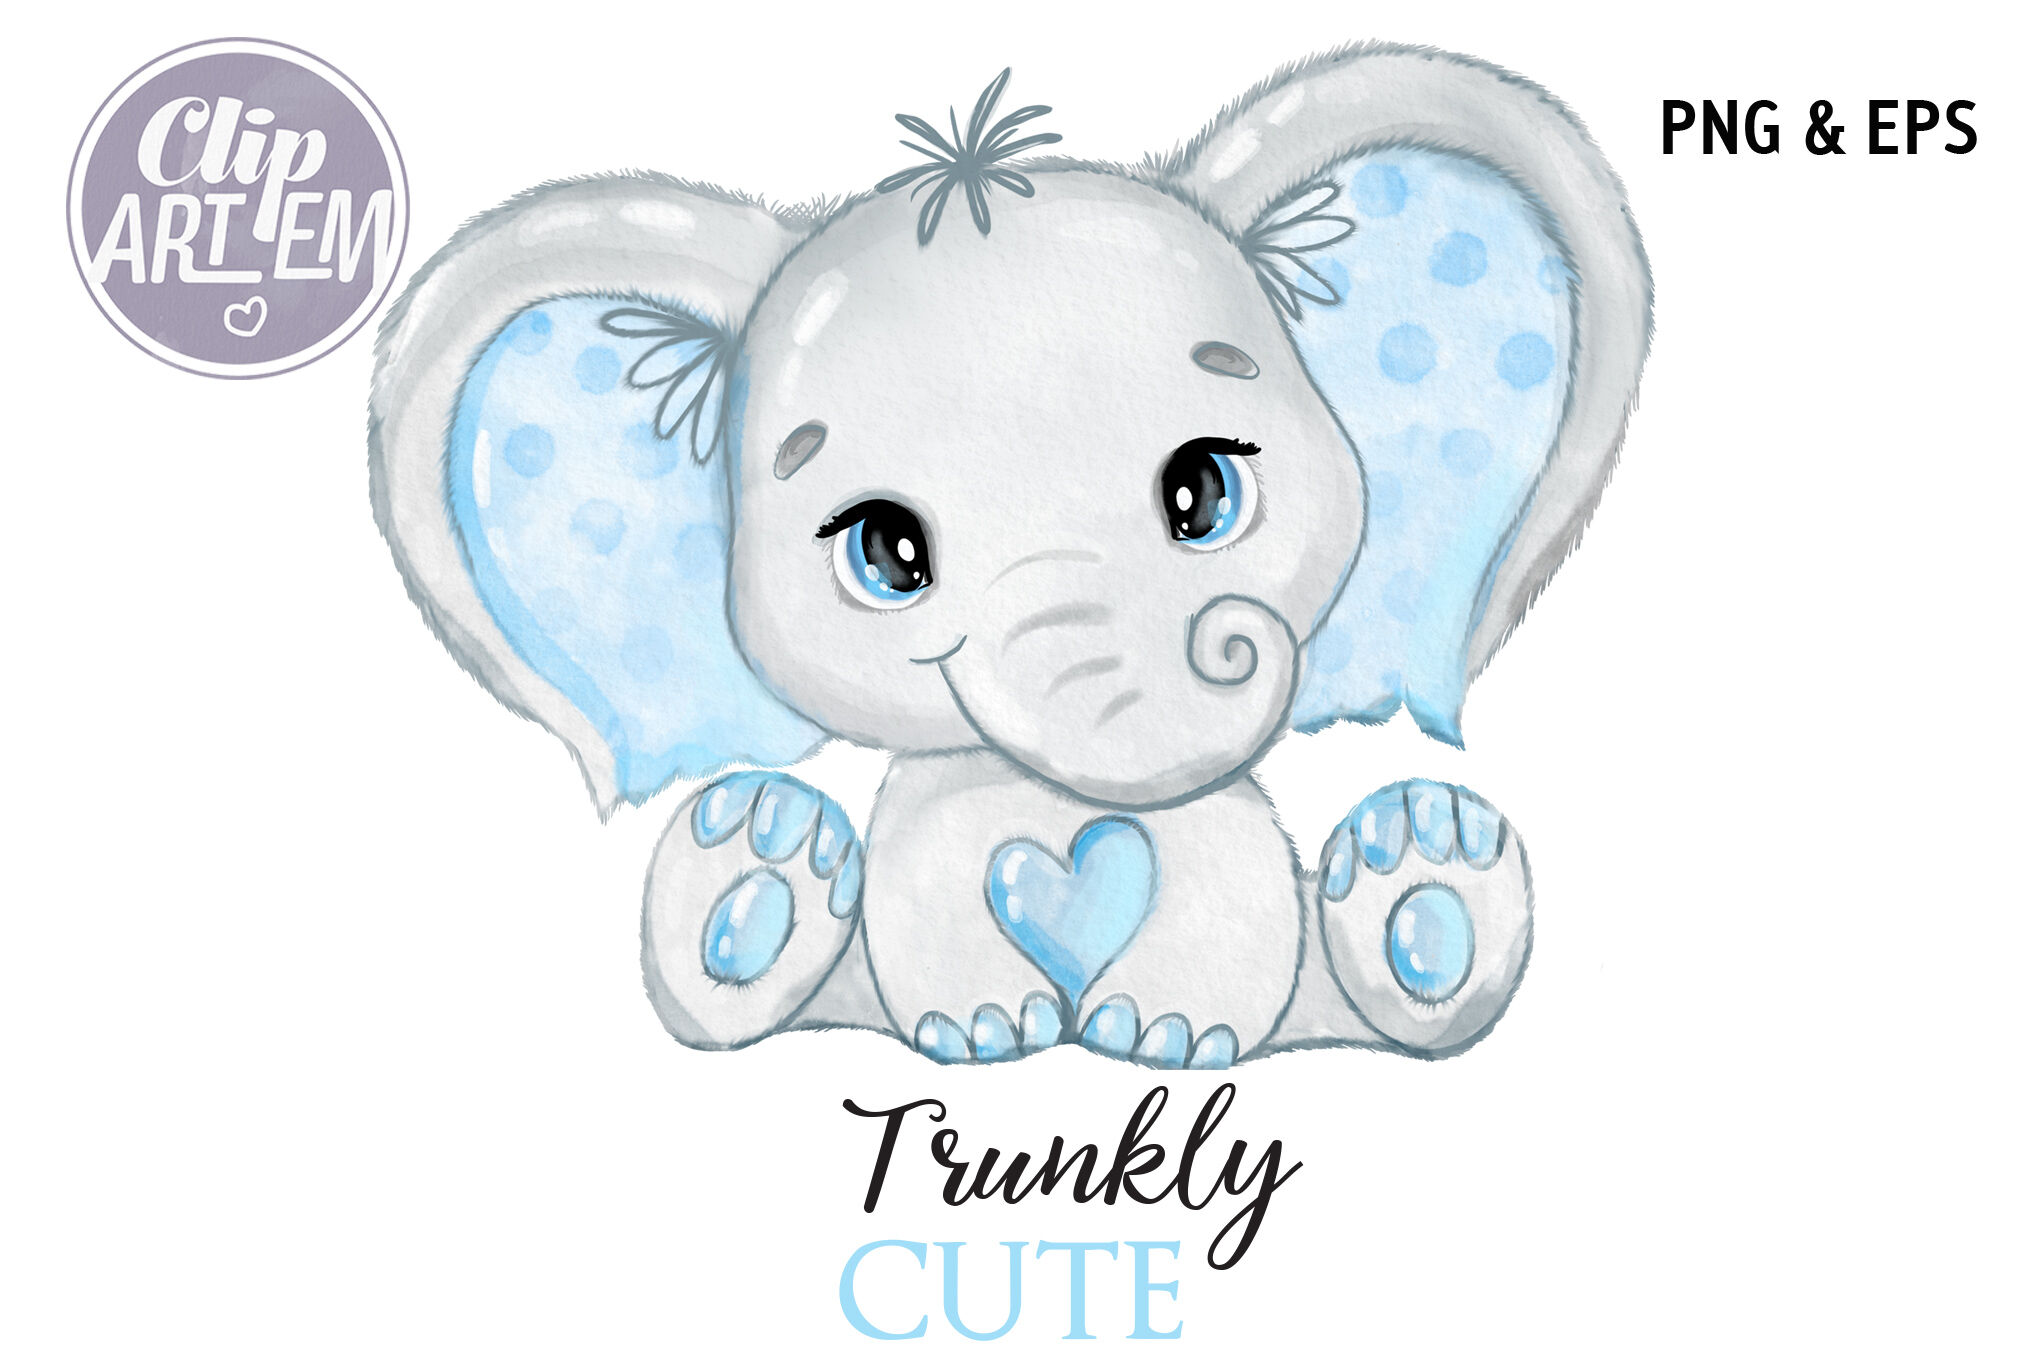 baby blue elephant clip art